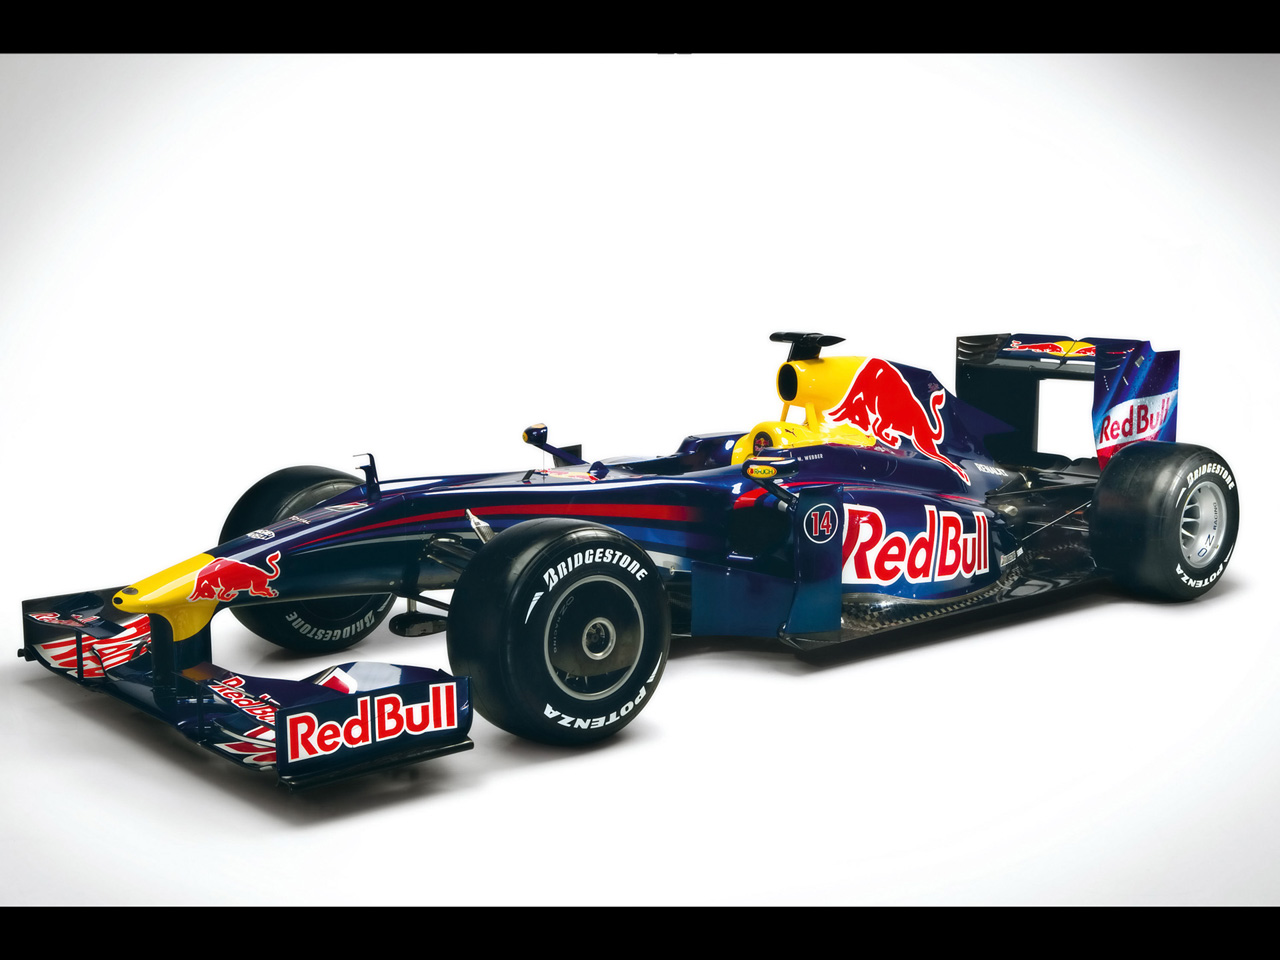 Red Bull Rb5 F1 Wallpaper Widescreen Desktop Background